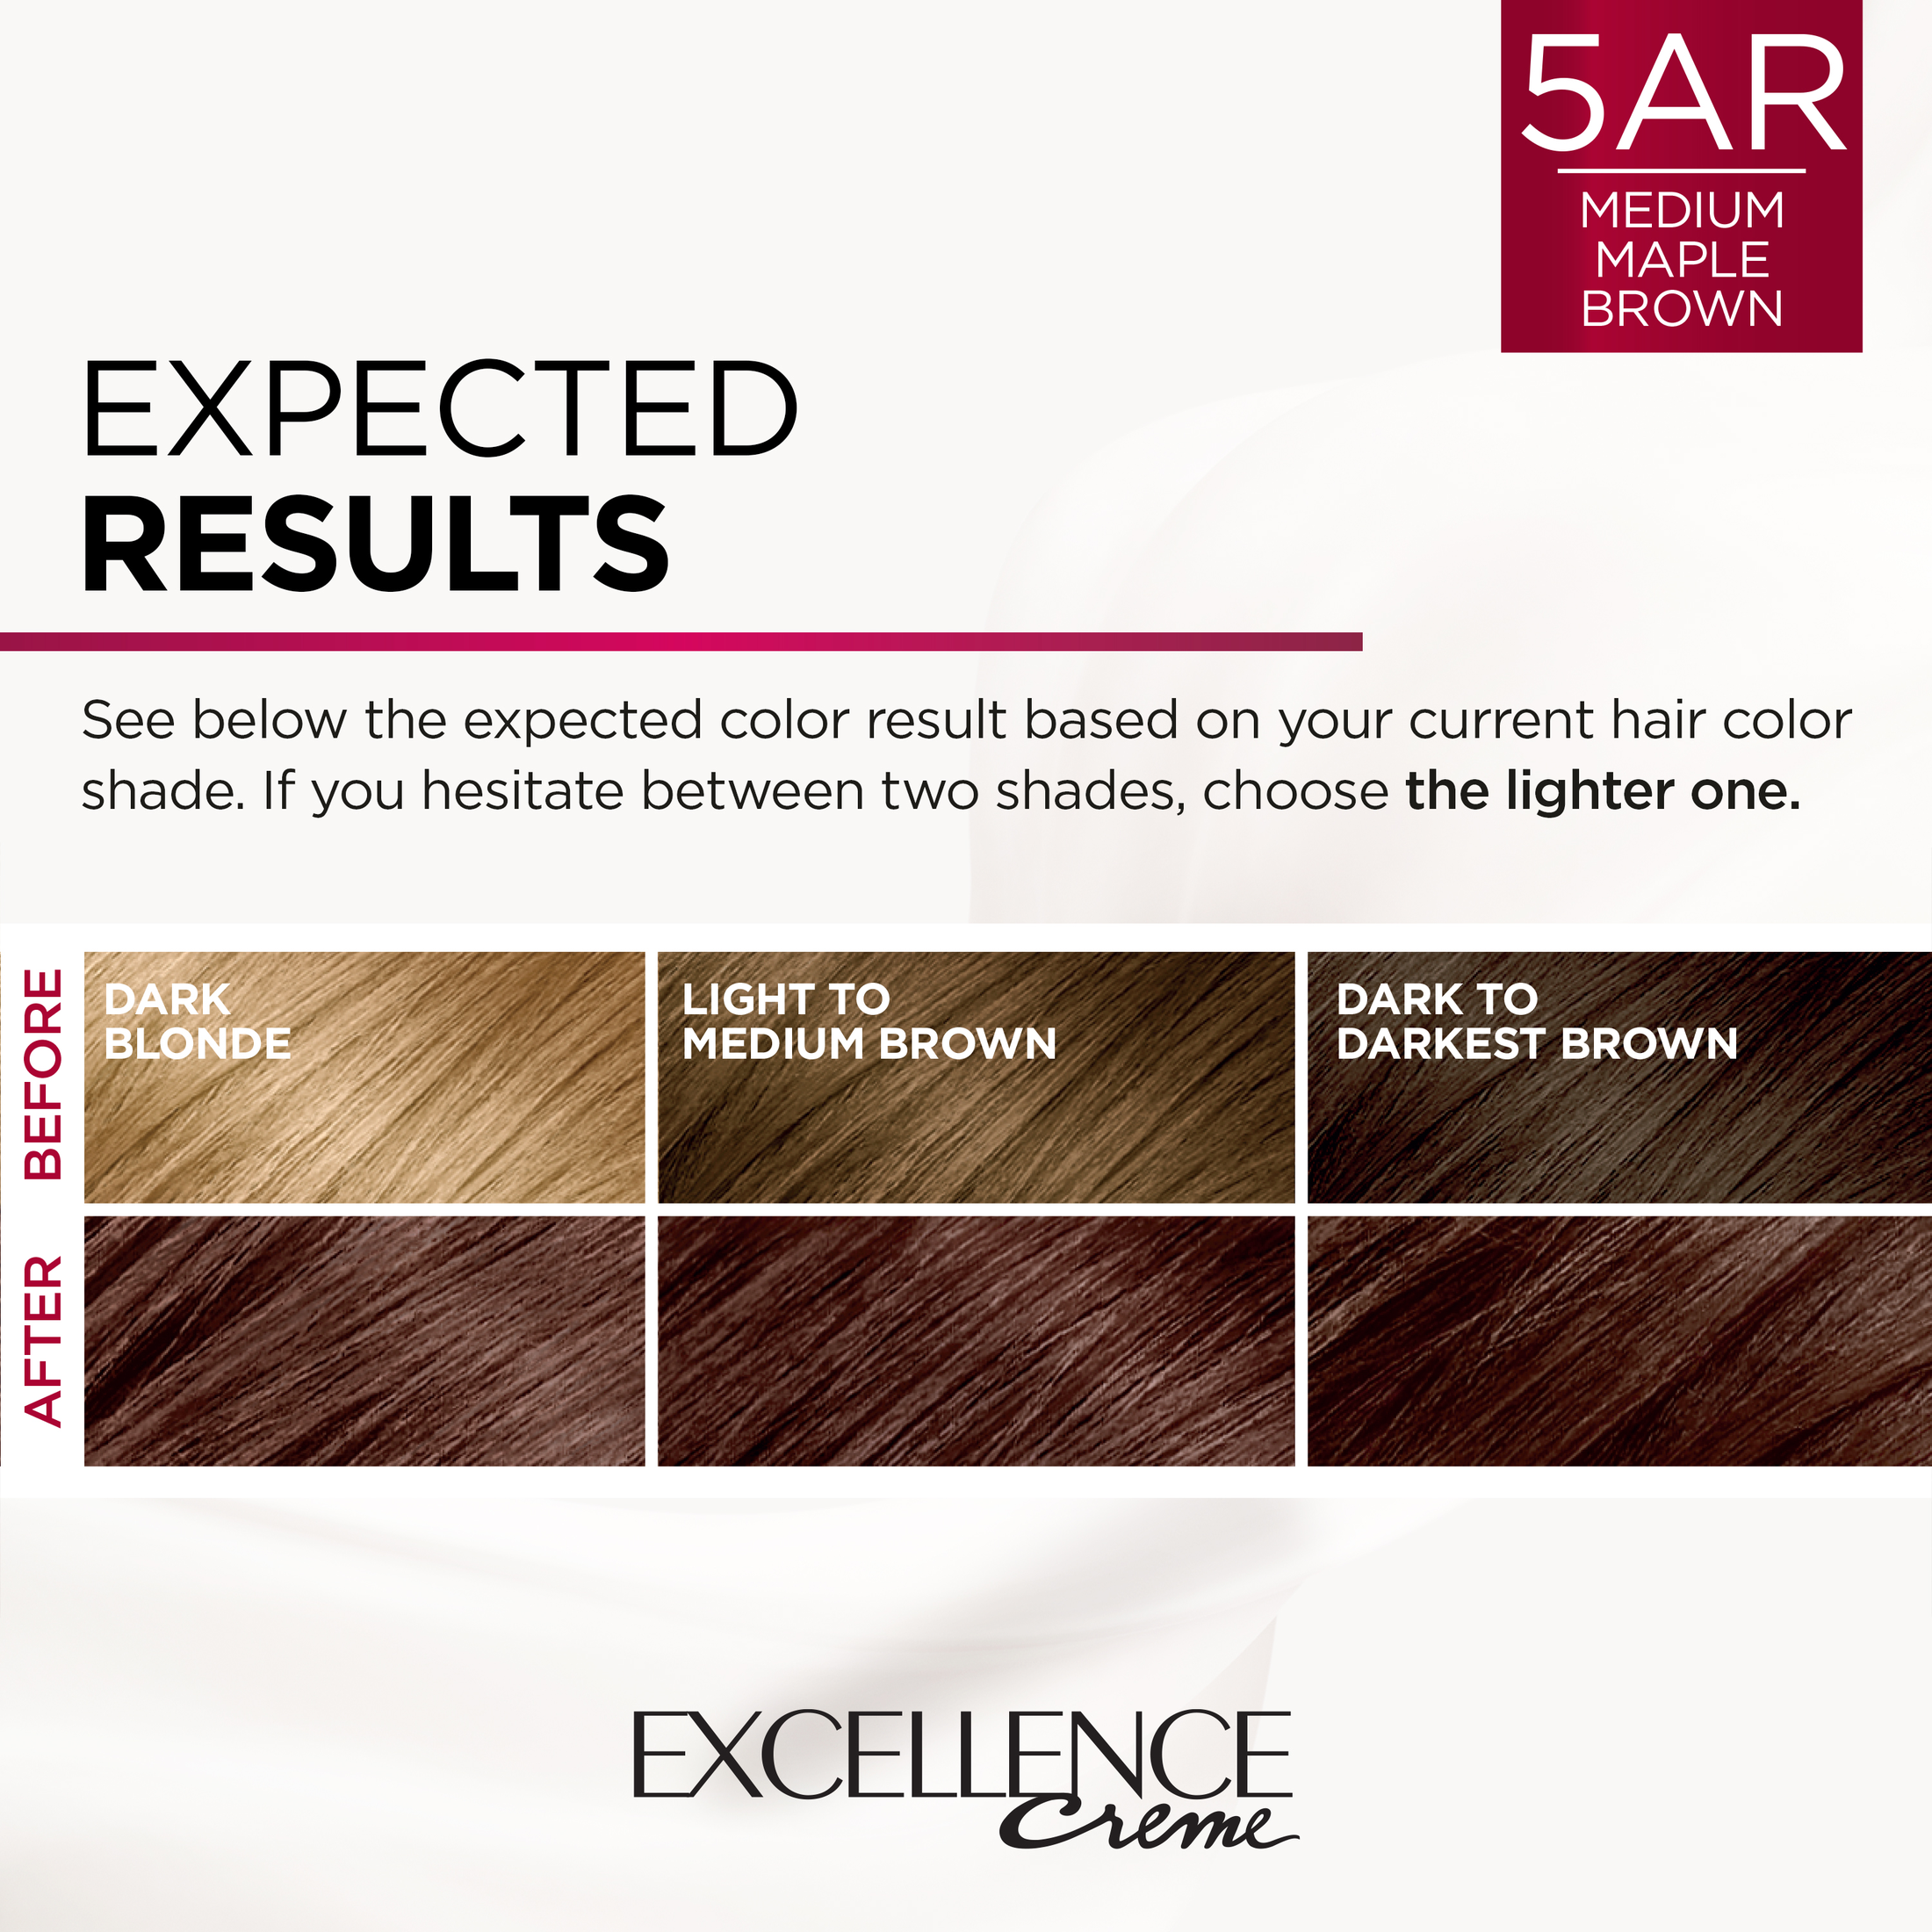 L'Oreal Paris Excellence Creme Permanent Hair Color, 5AR Medium Maple Brown - image 5 of 8